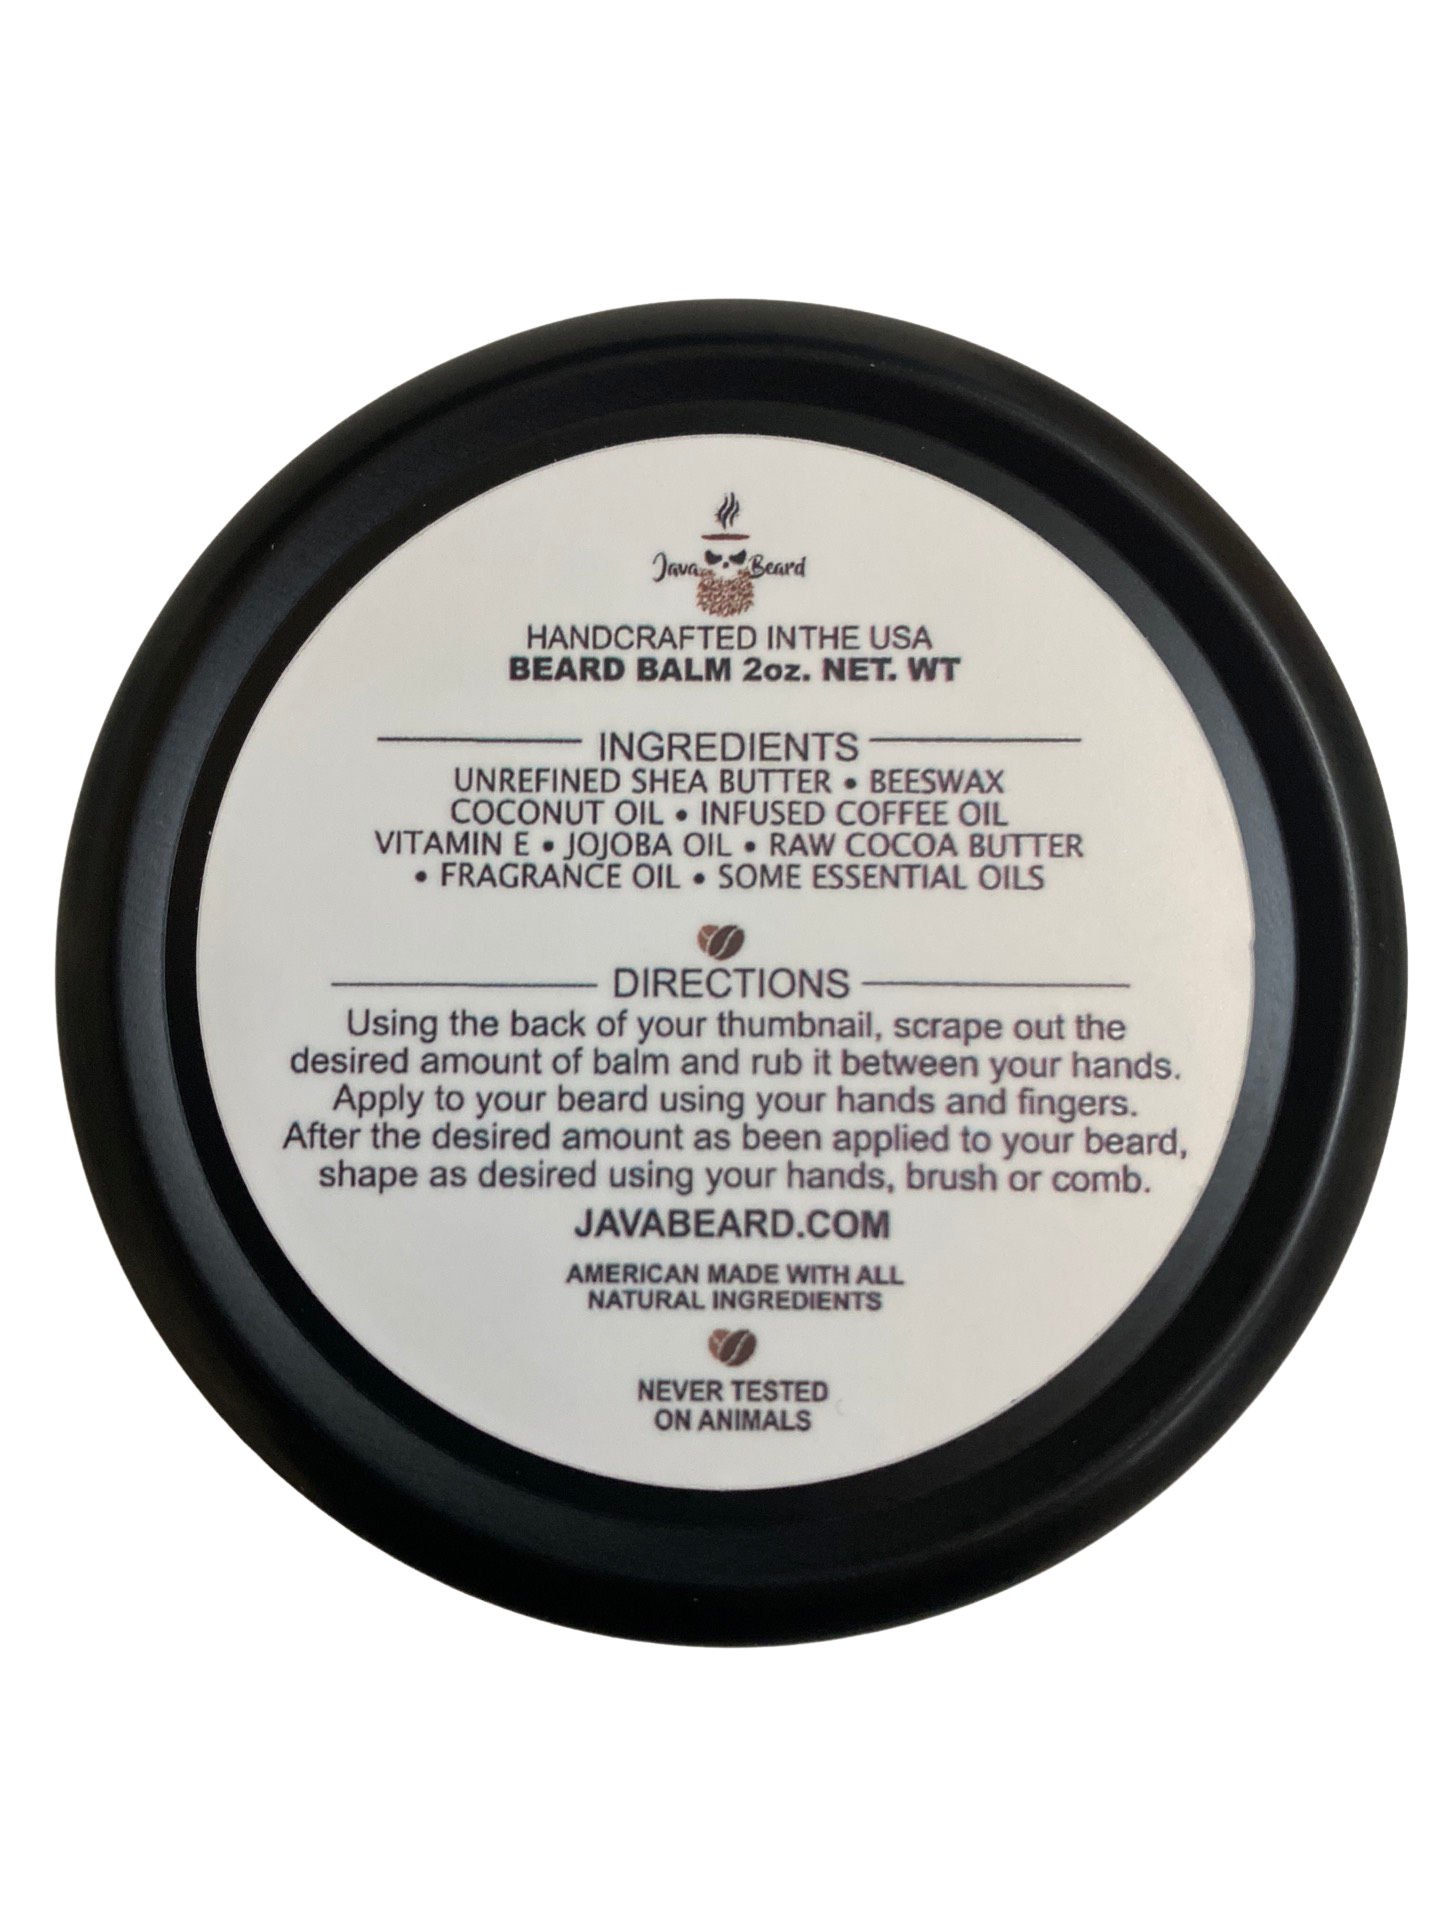 Java Beard Blueberry Muffin Beard Balm coffee oil, beard balm, beard care products